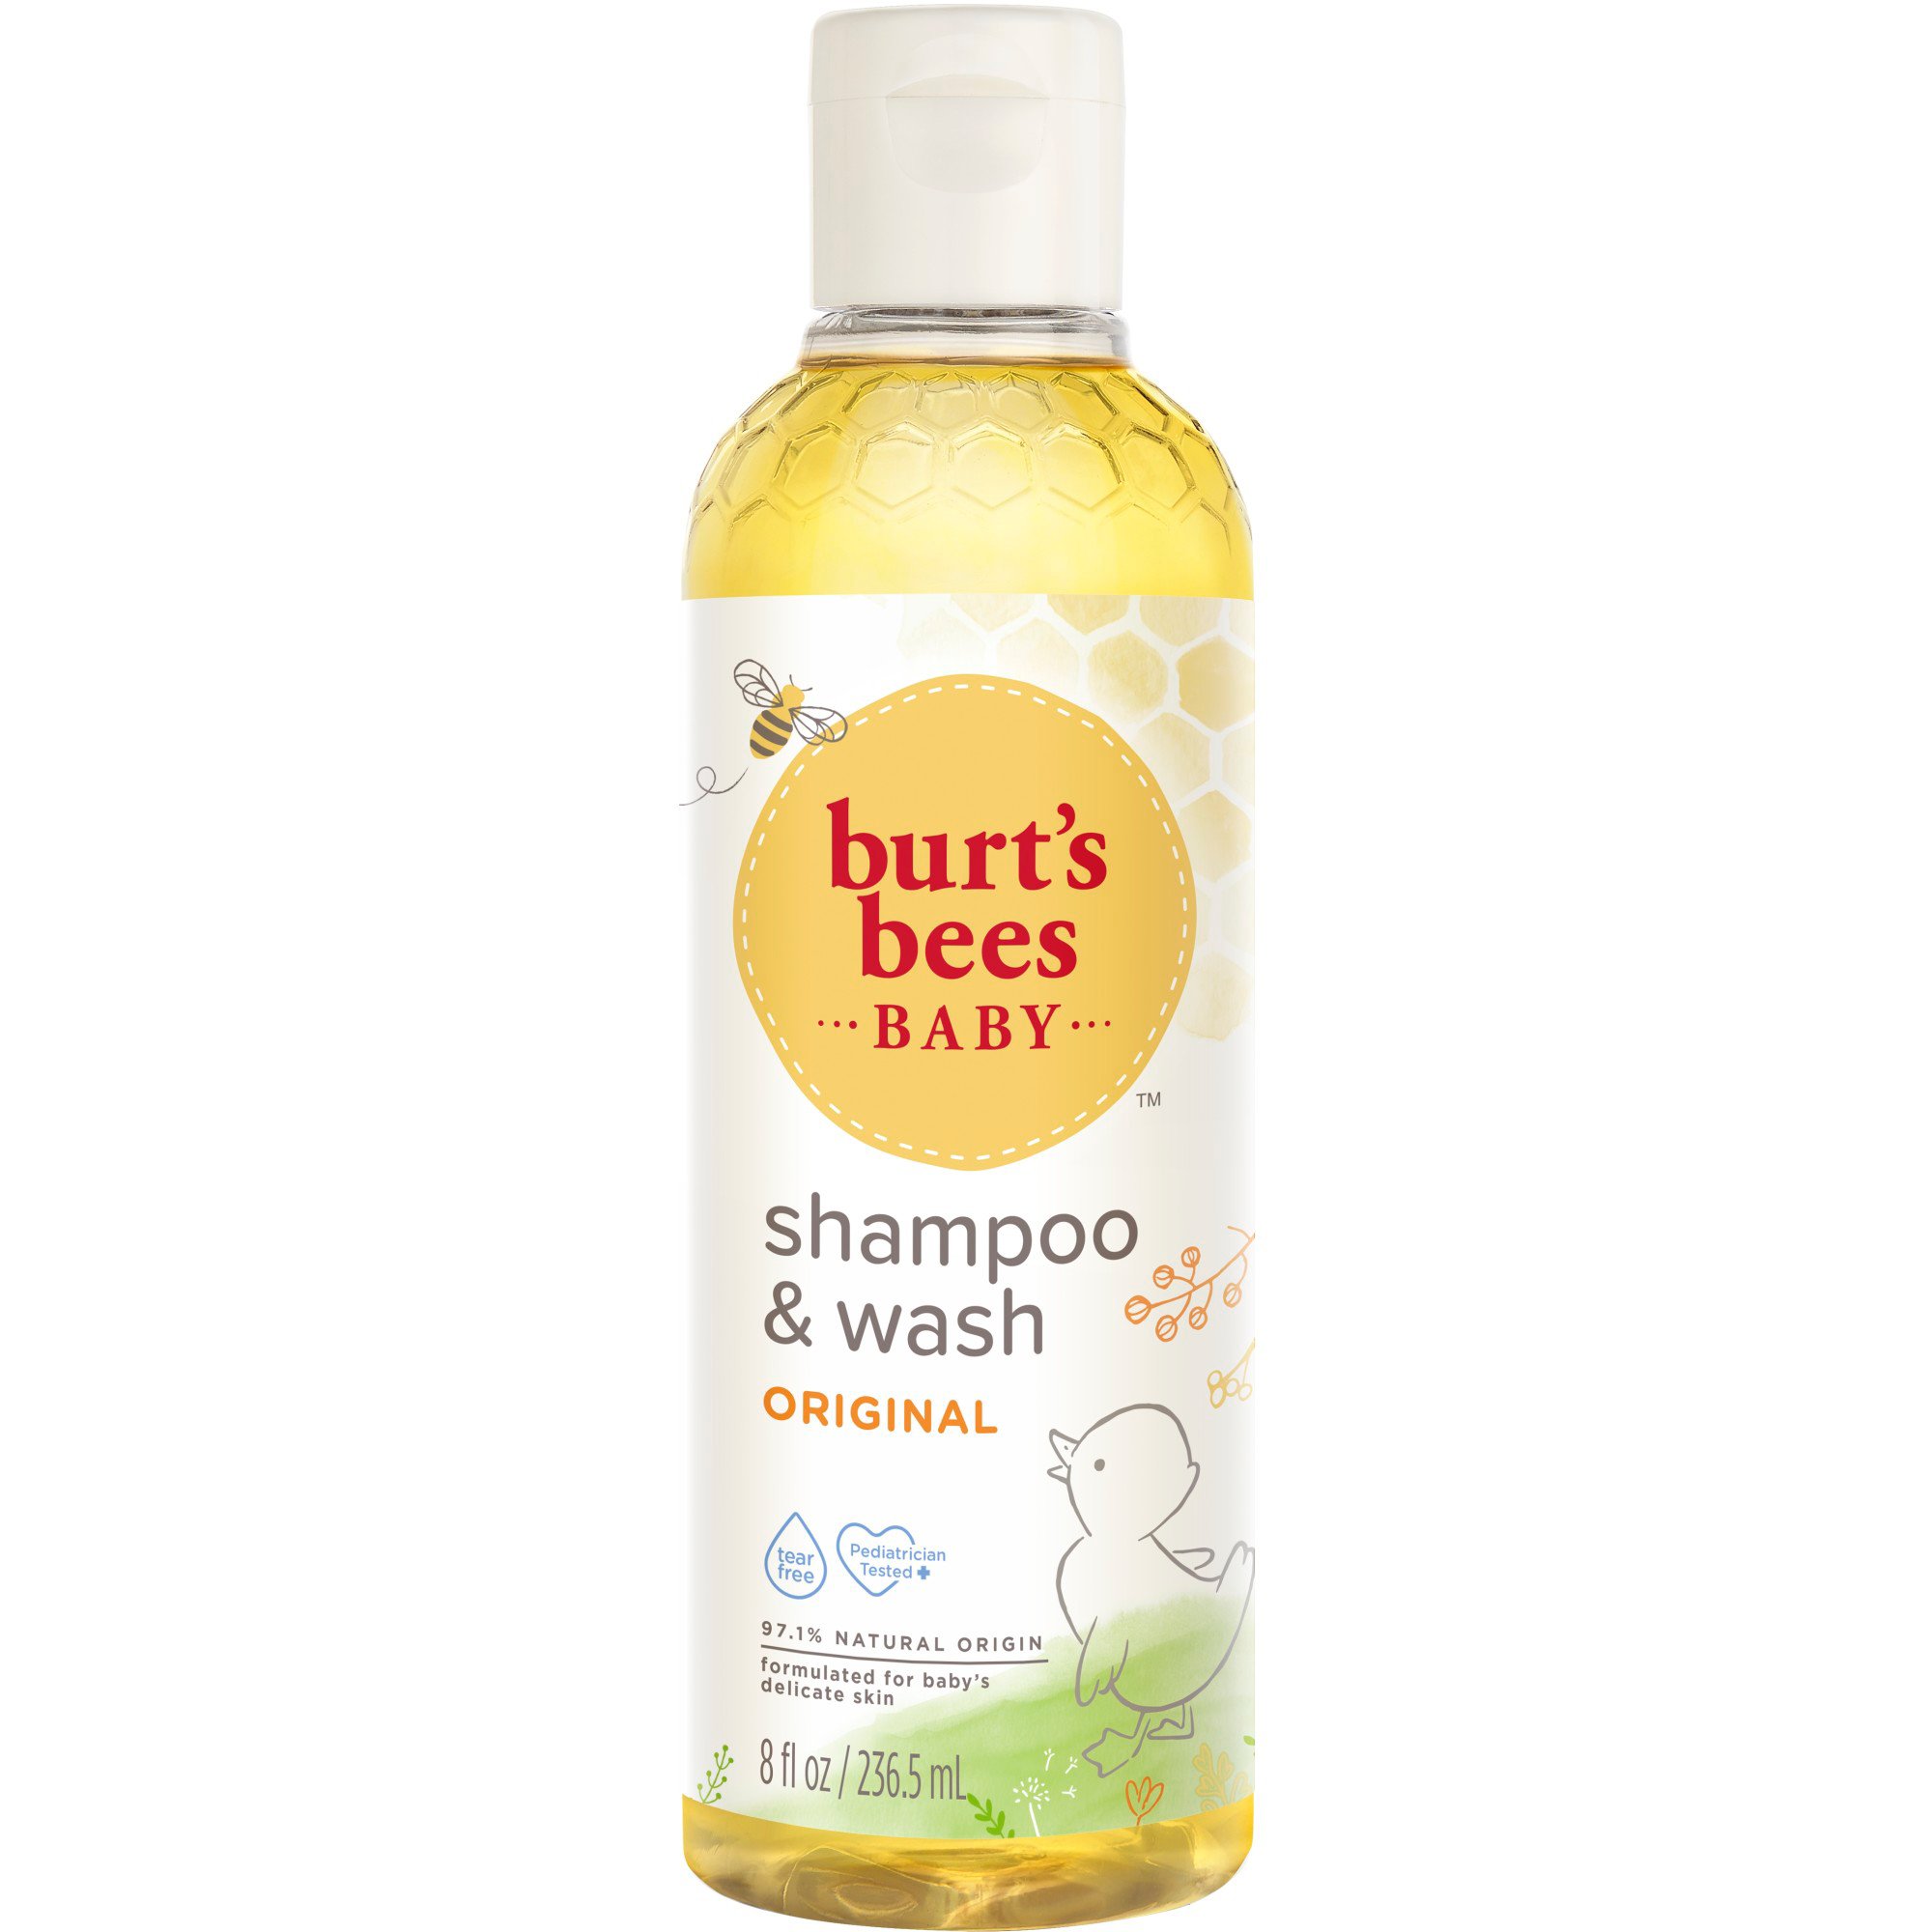 Burt's Bees Baby Shampoo & Wash - Shop Bath & Hair Care H-E-B